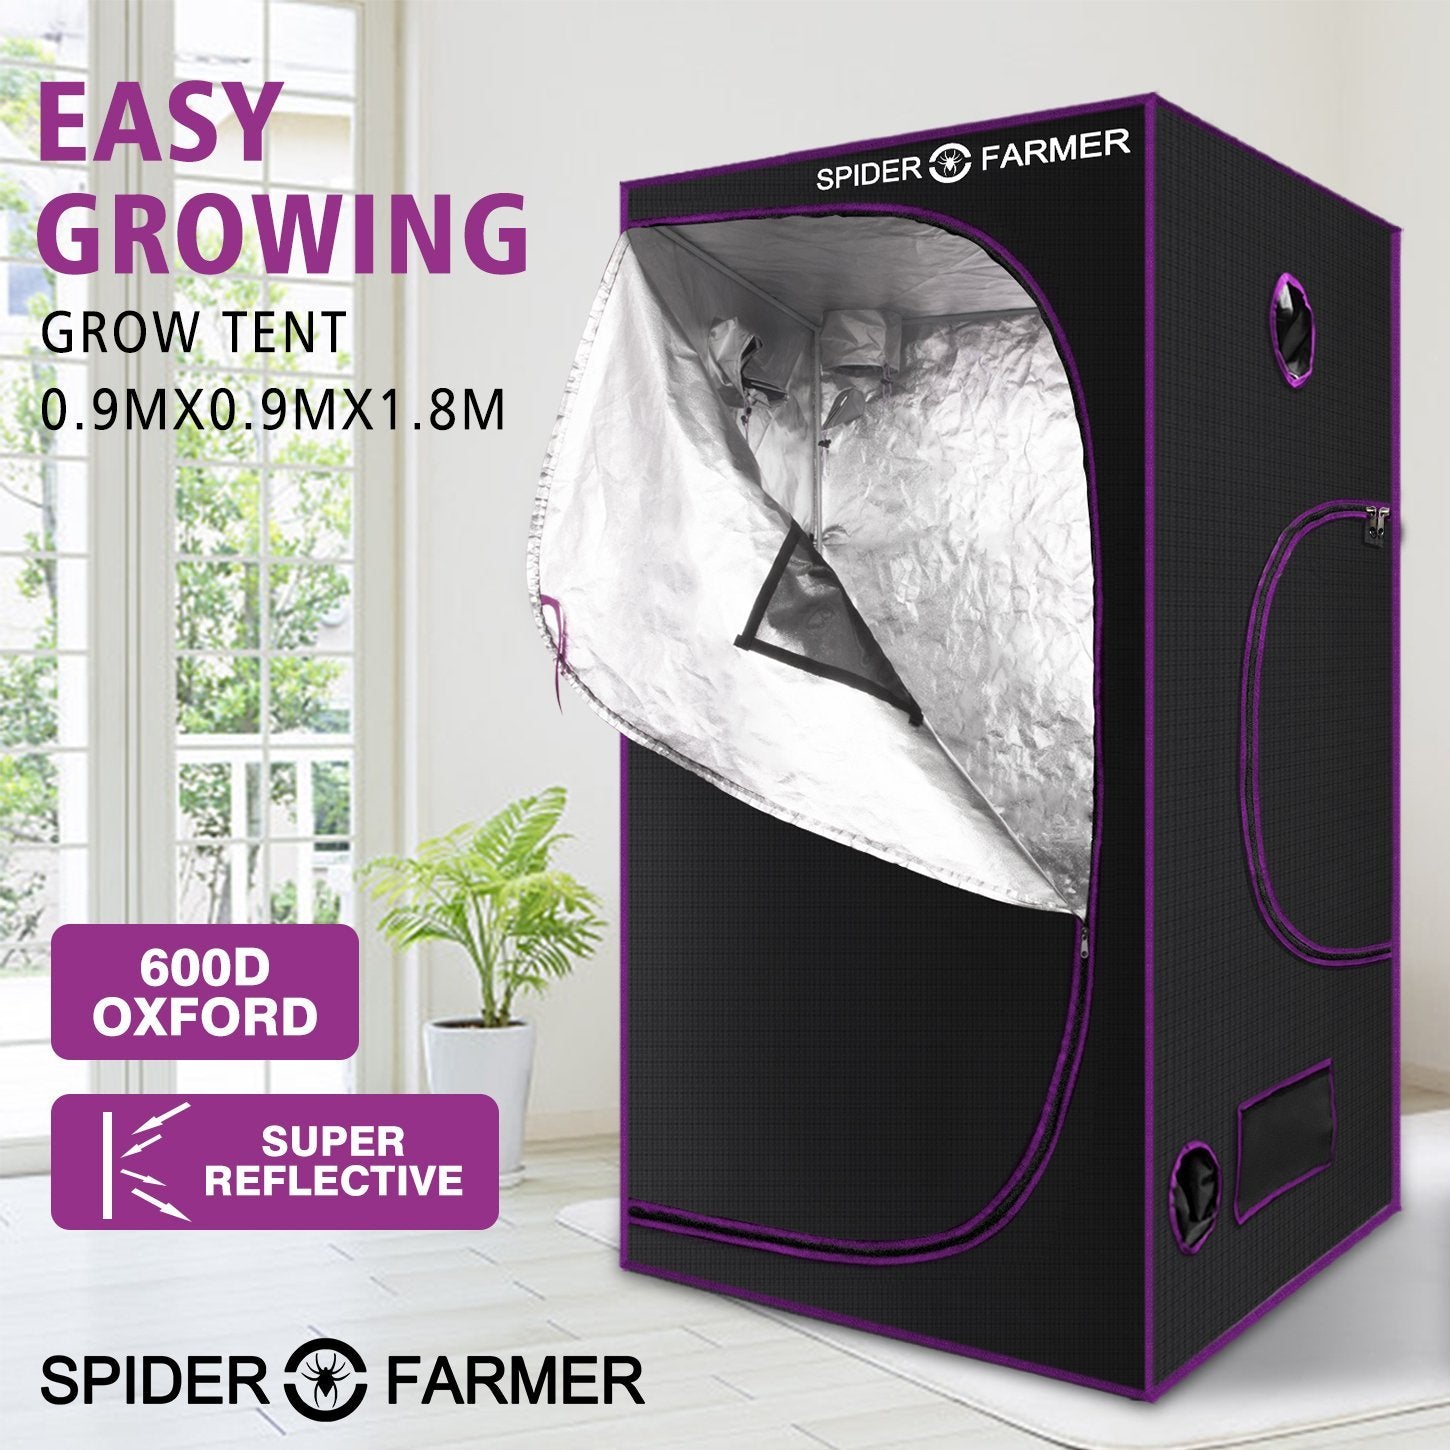 Spider Farmer 4' x 4' x 6.5' 120cm x 120cm x 200cm Indoor Grow Tent New